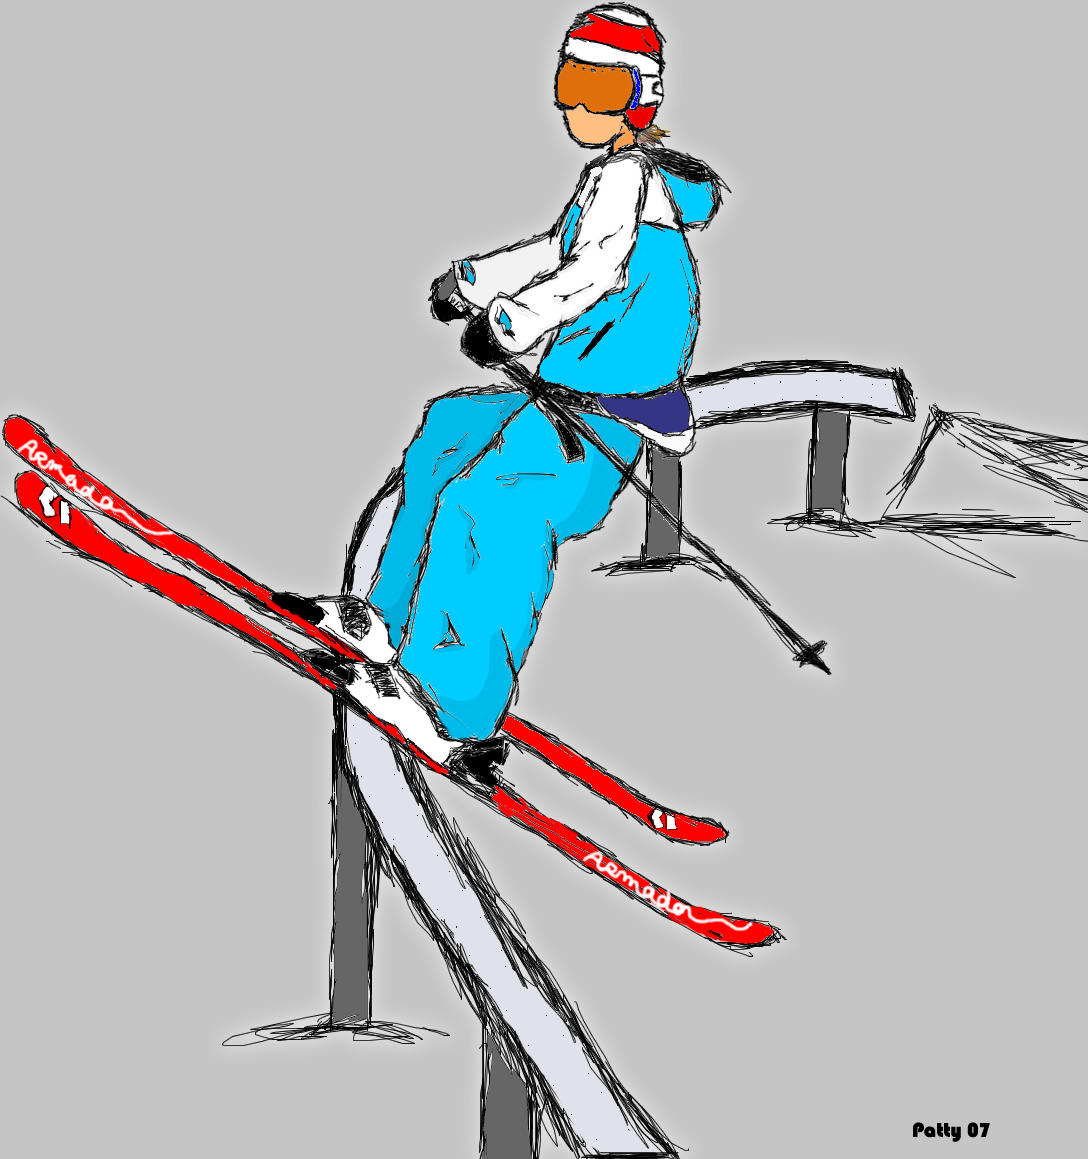 [Skier+Rail.png]